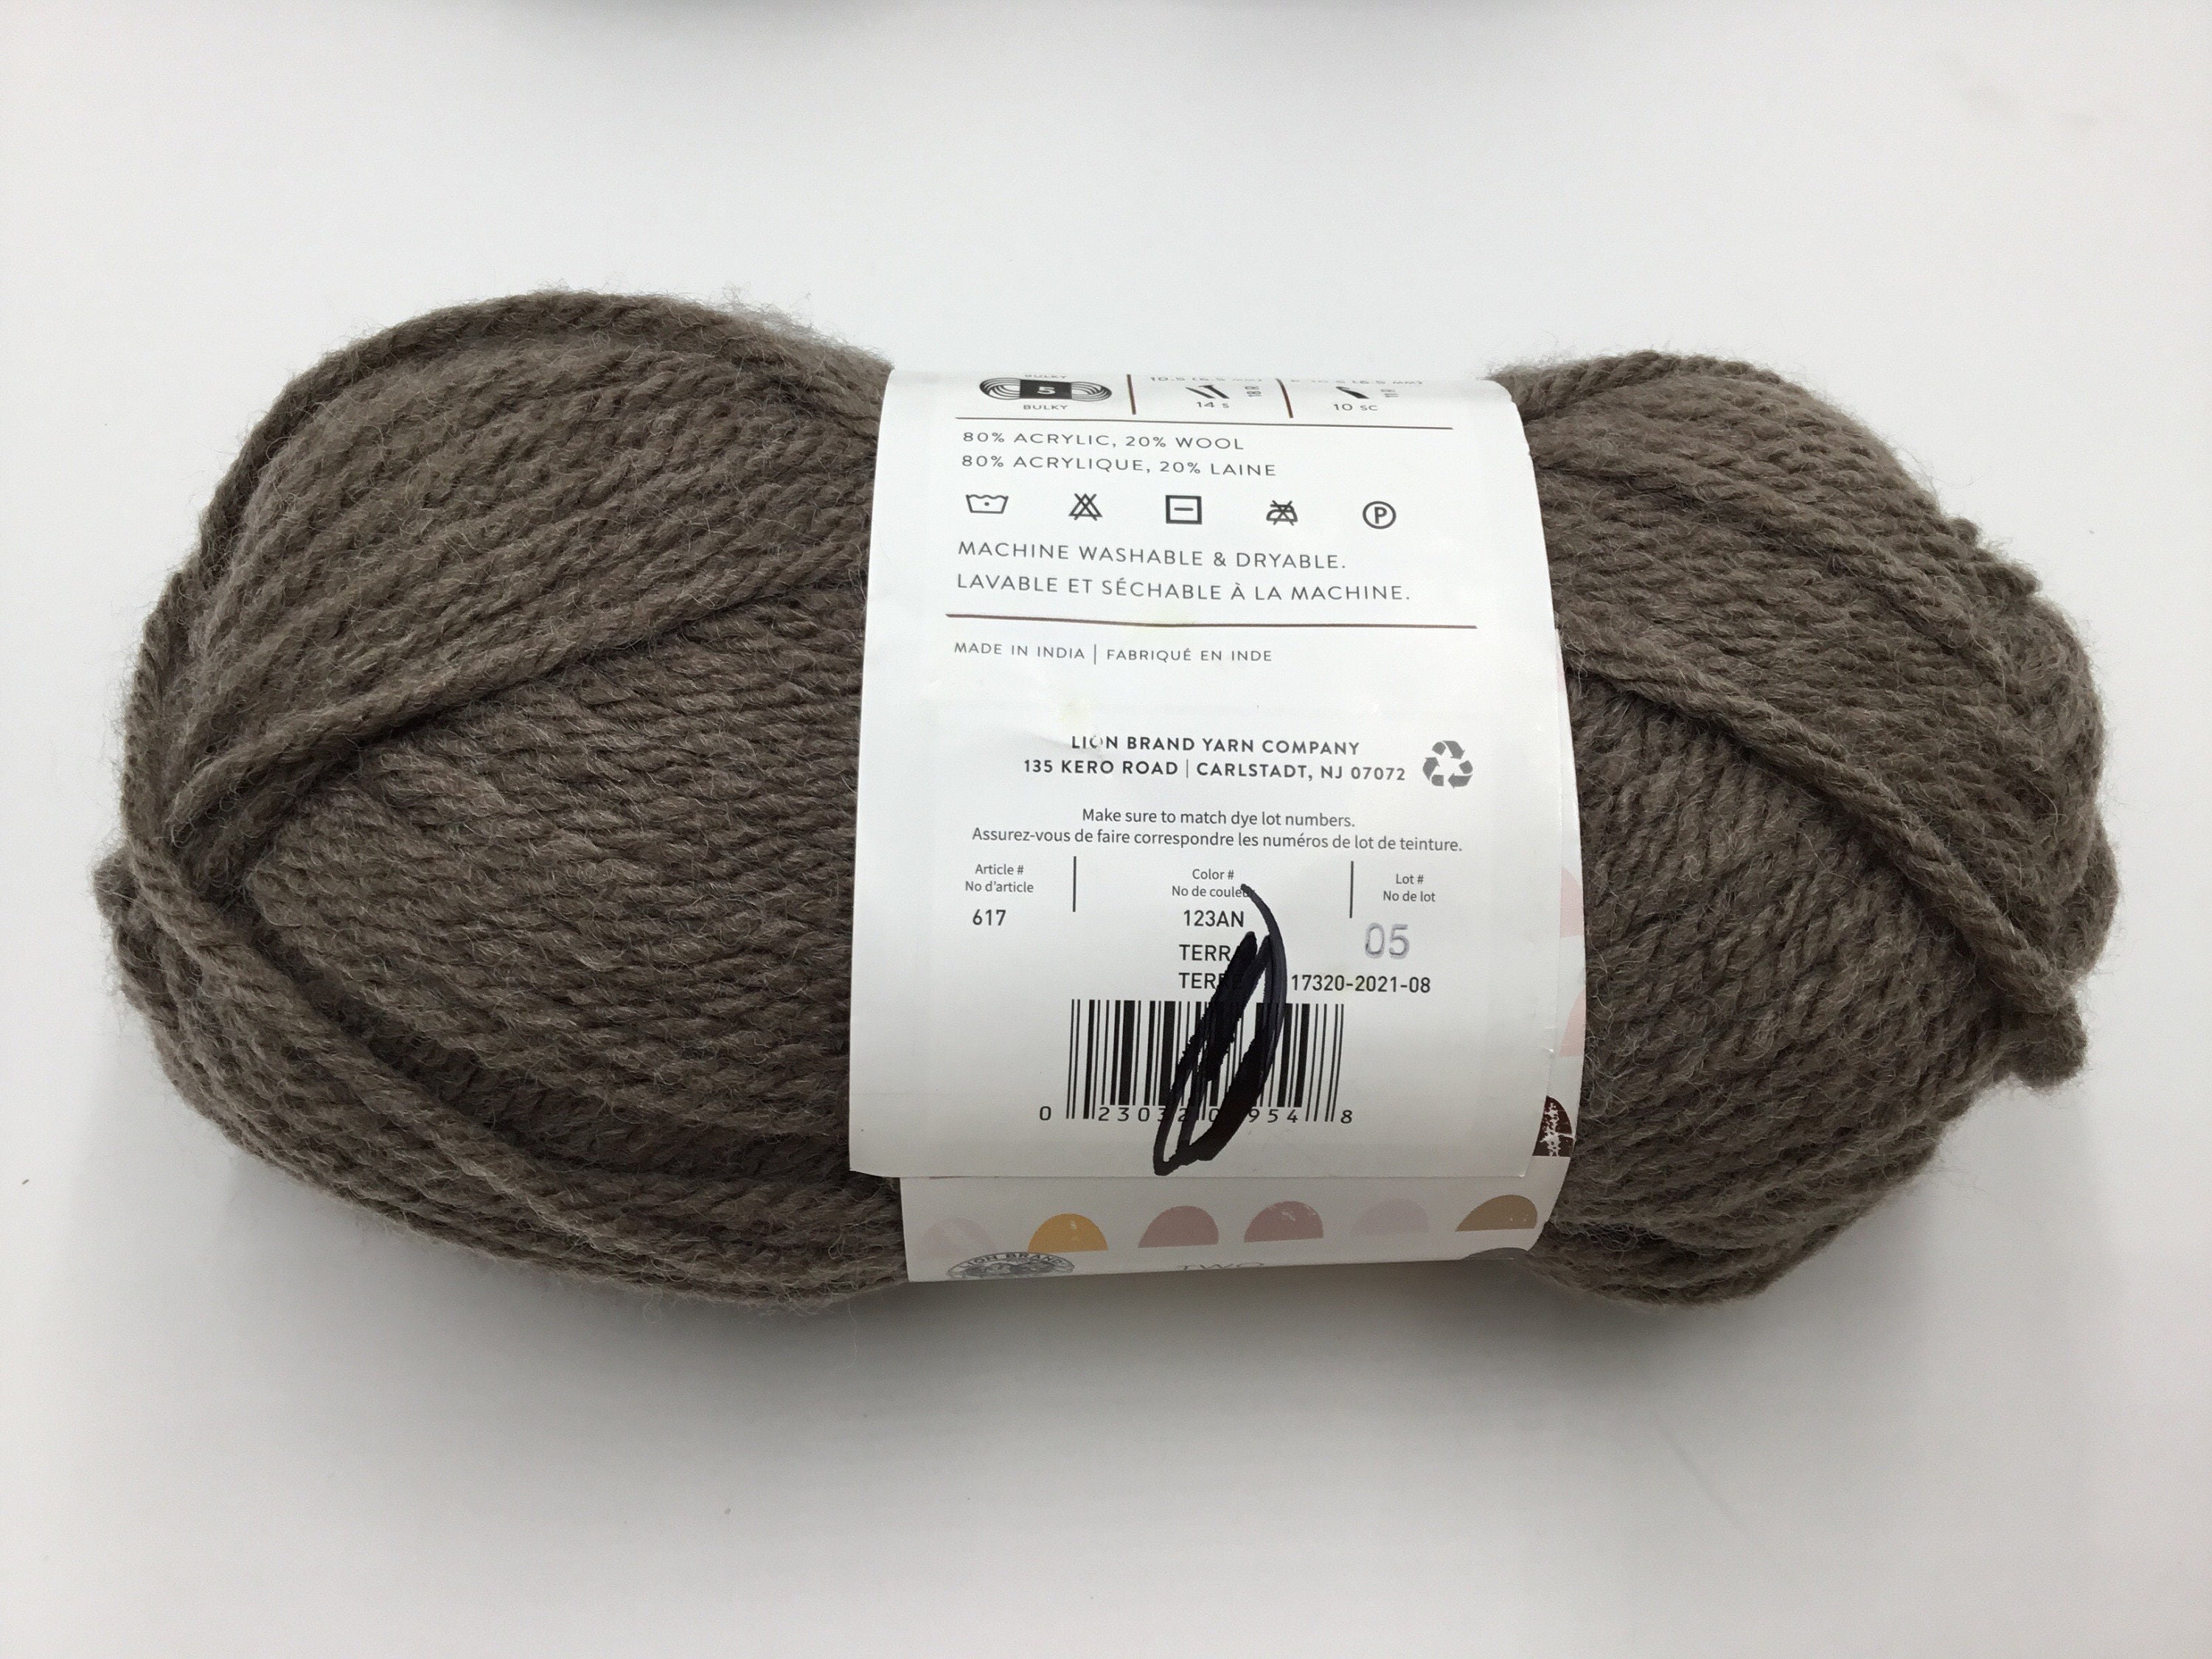 Lion Brand Arrowwood Hue + Me Yarn (5 - Bulky), Free Shipping at Yarn Canada